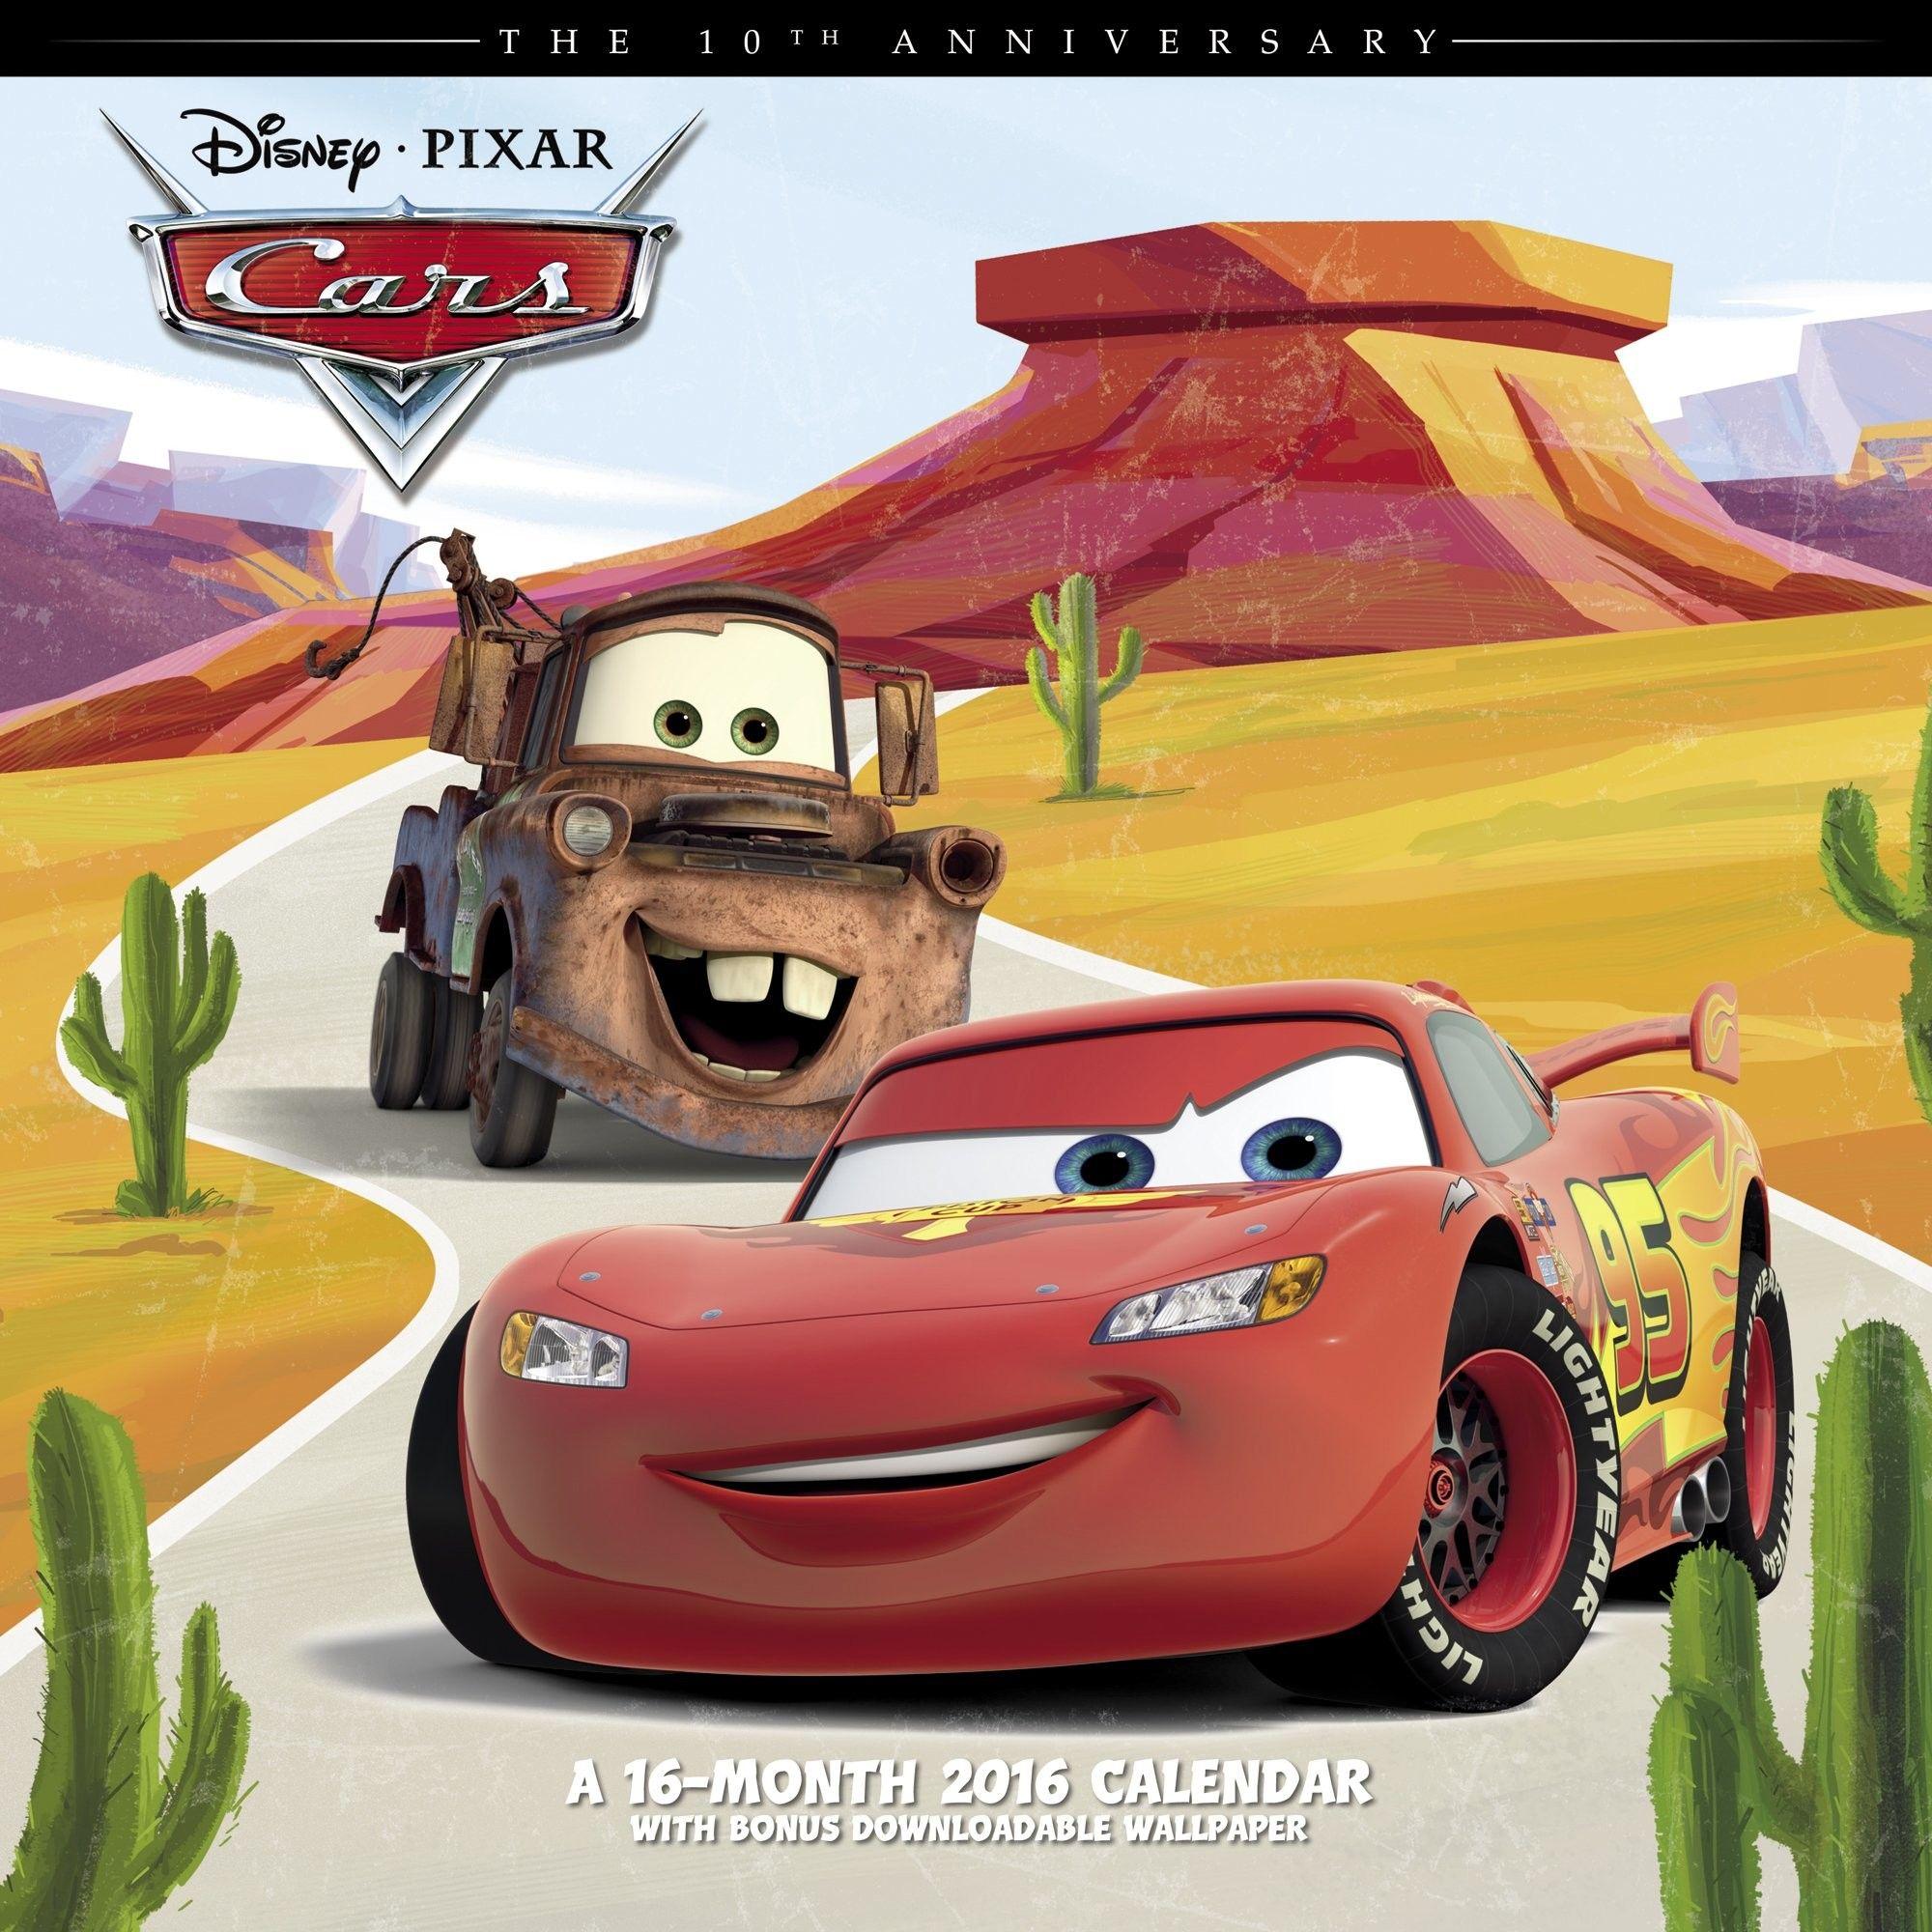 Pixar Cars Wallpapers Top Free Pixar Cars Backgrounds WallpaperAccess